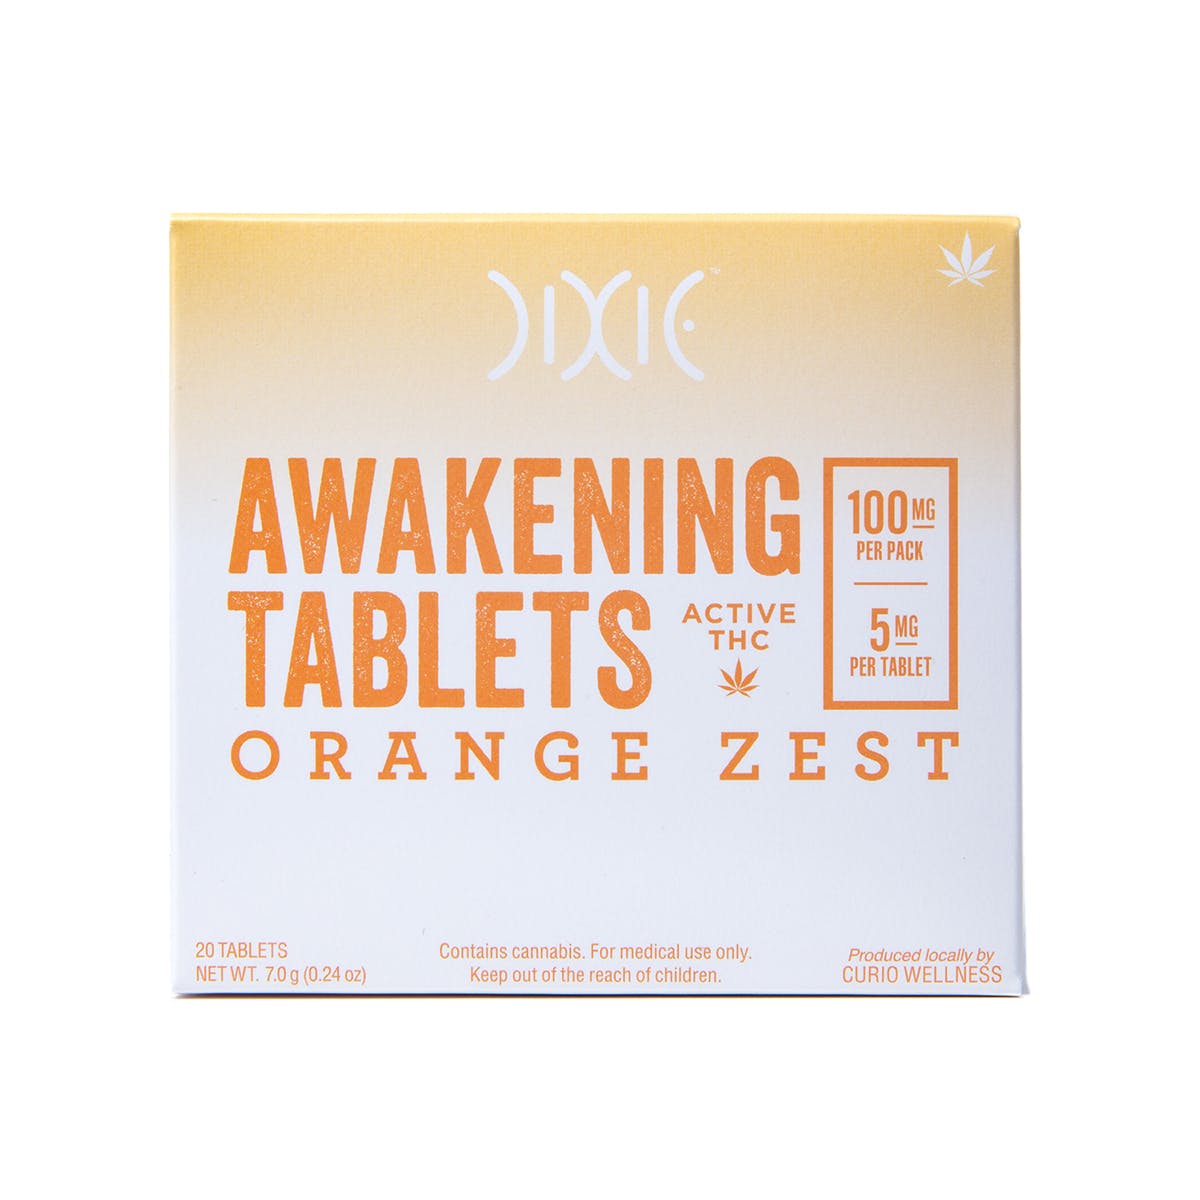 marijuana-dispensaries-canna-city-in-trinidad-awakening-tablets-orange-zest-100mg